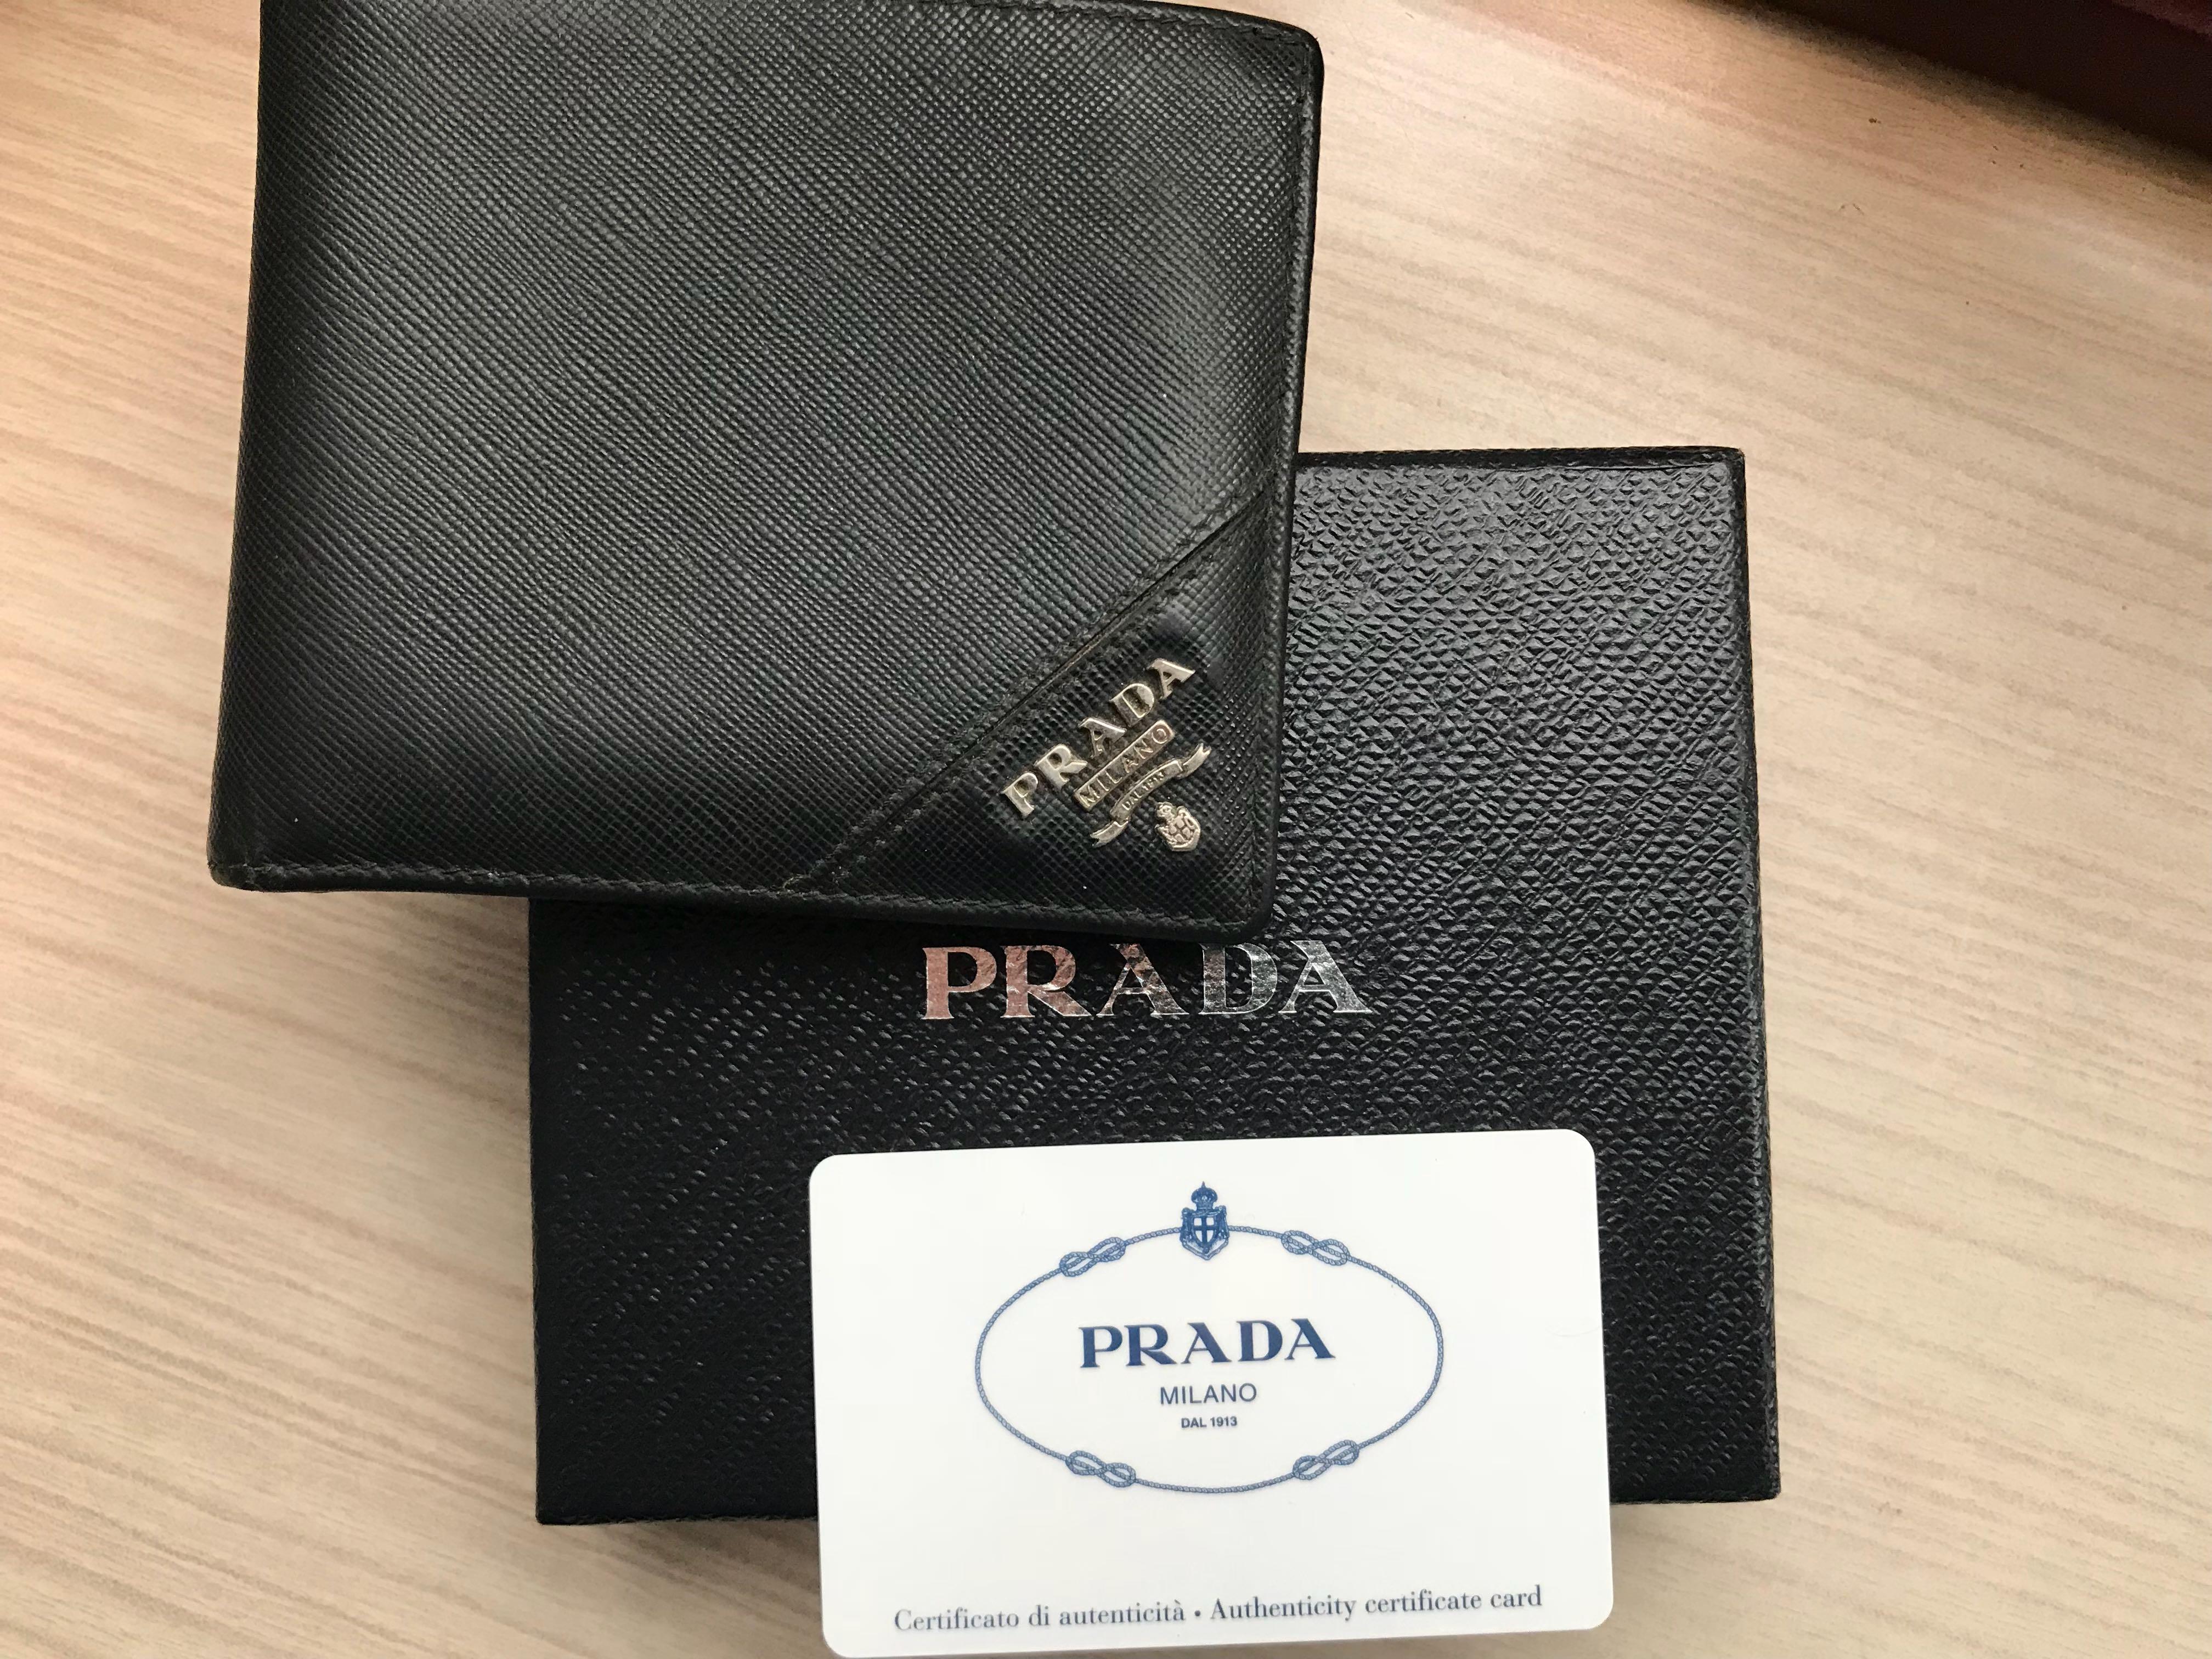 prada mens wallet with coin pocket